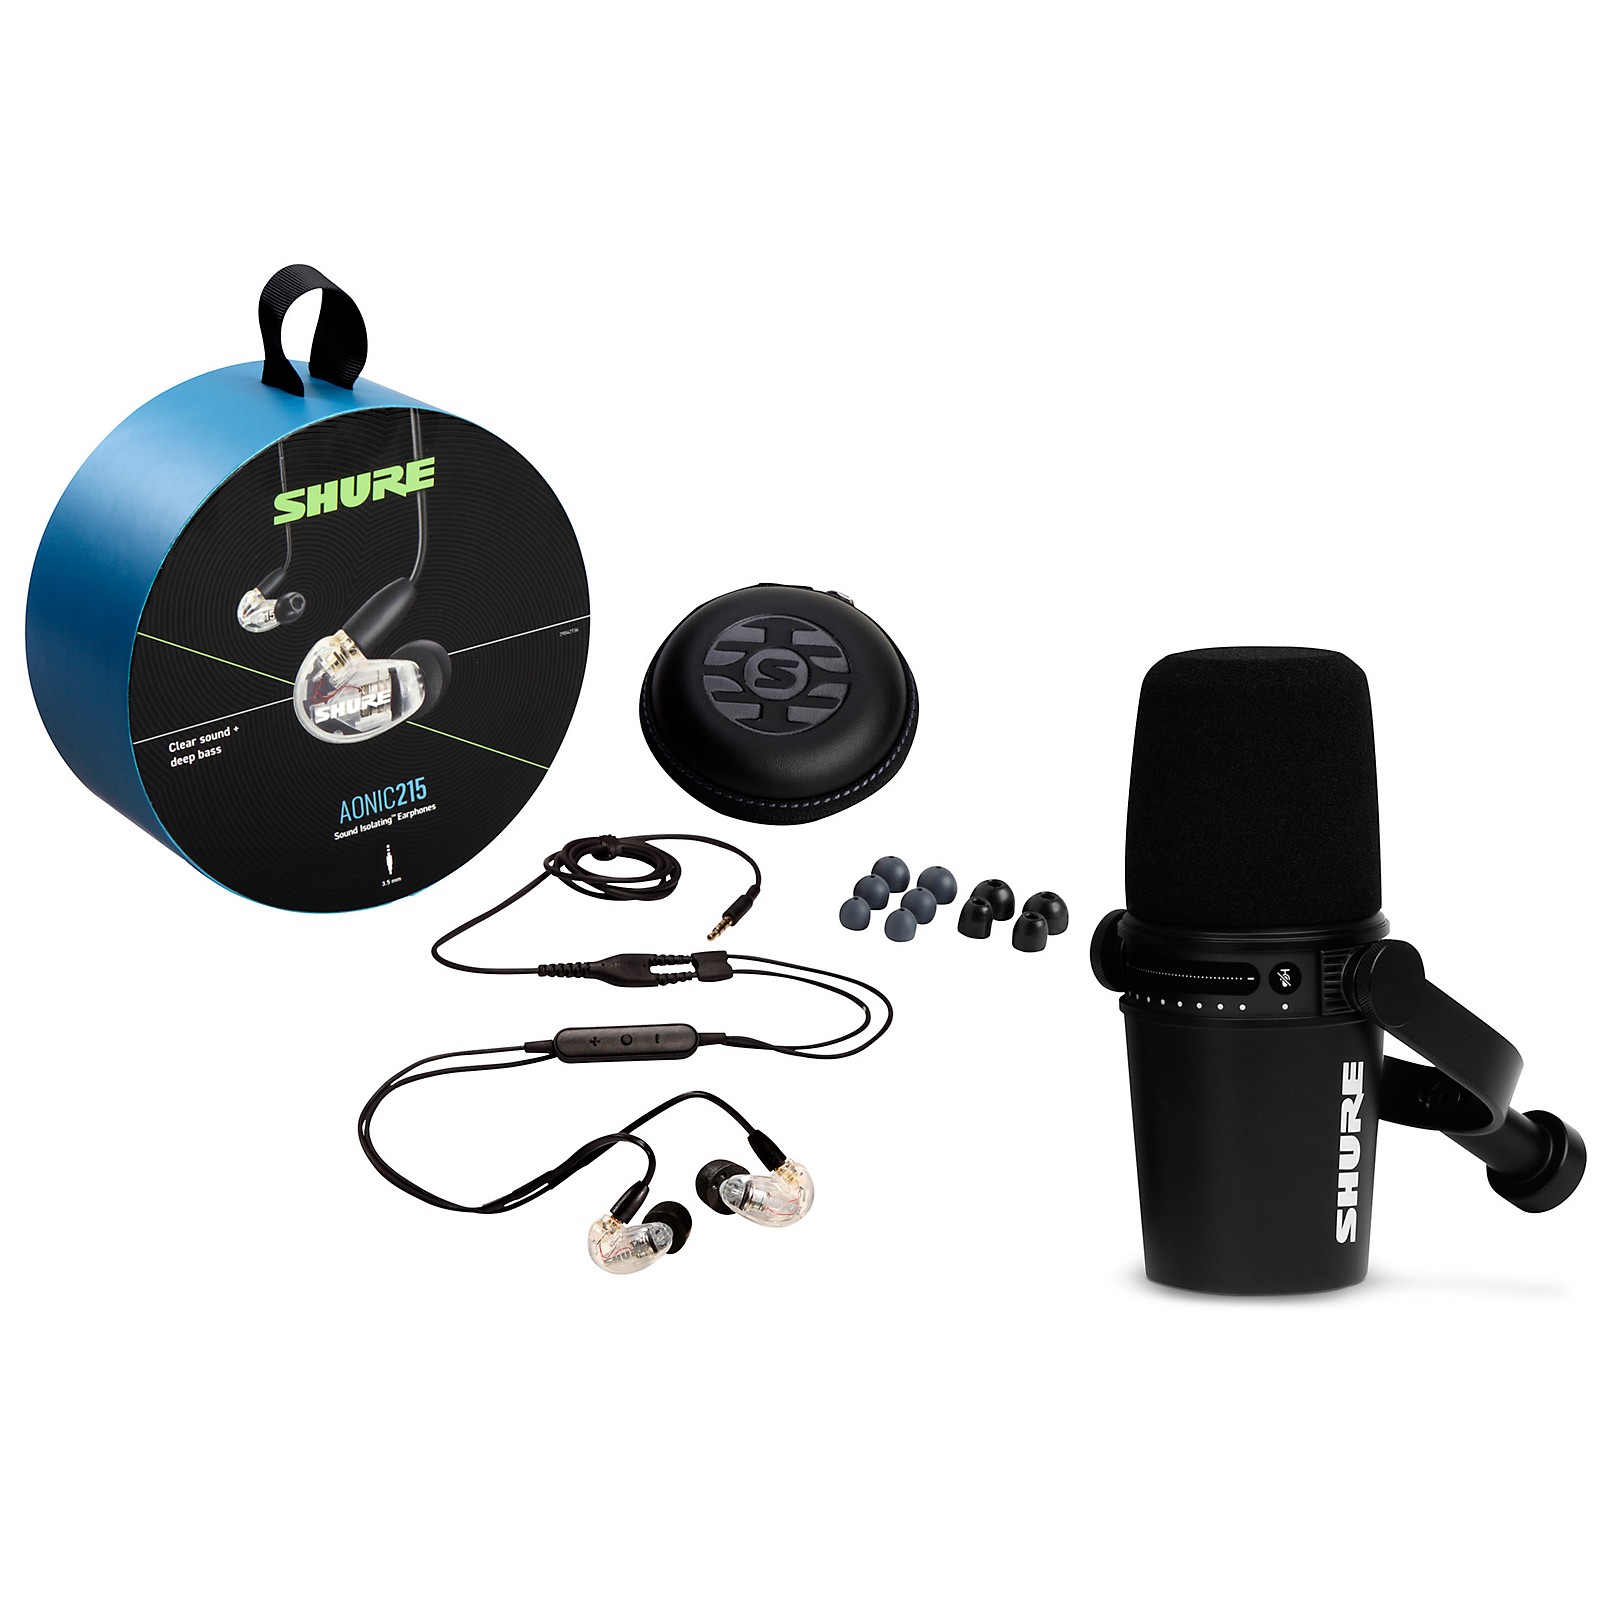 Shure MV7-K USB Microphone and AONIC215 Earphones Content Creator